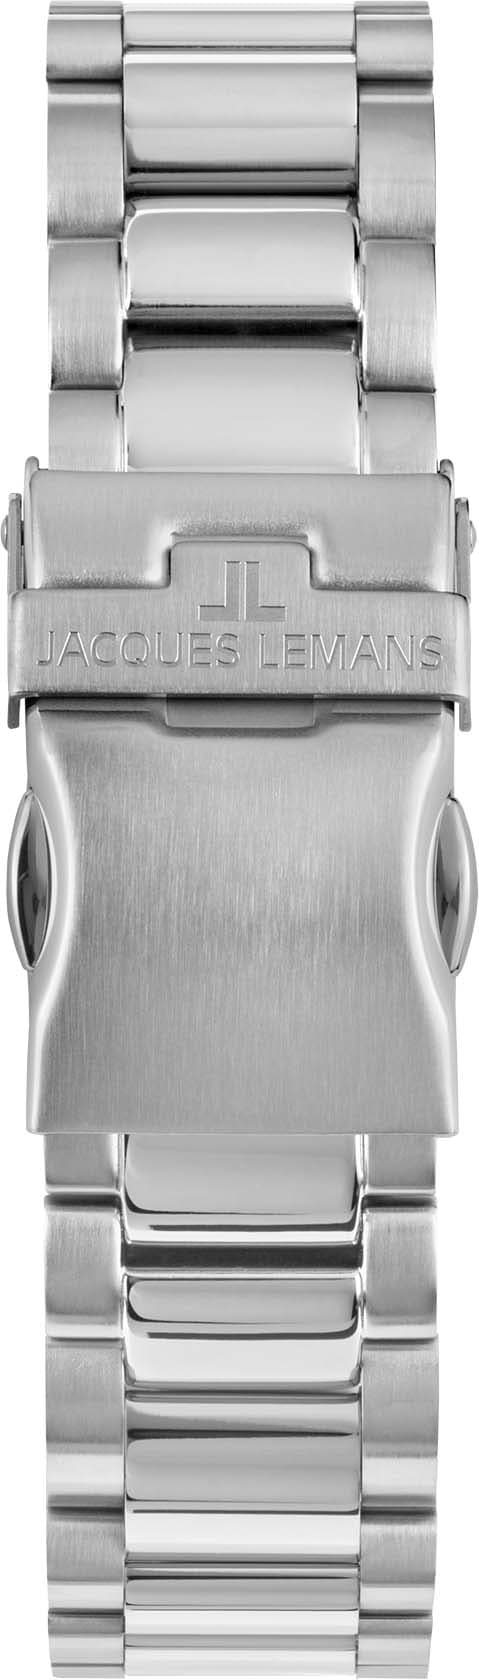 Jacques Lemans Chronograph »Liverpool, 1-2140F« online | kaufen I\'m walking